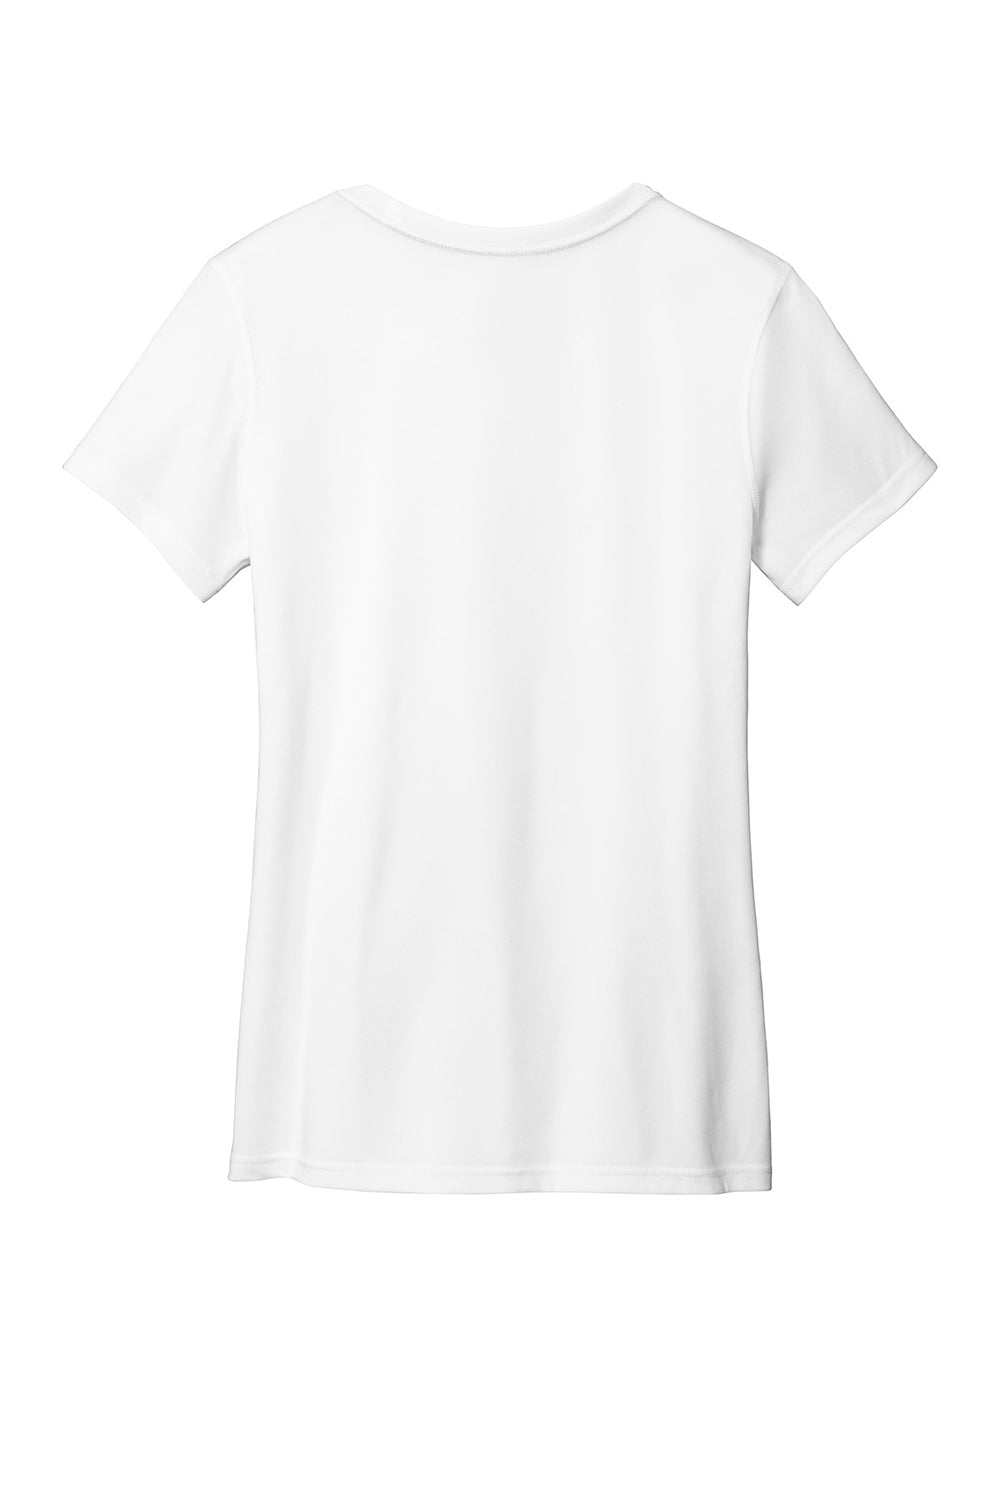 Nike CU7599 Womens Legend Dri-Fit Moisture Wicking Short Sleeve Crewneck T-Shirt White Flat Back